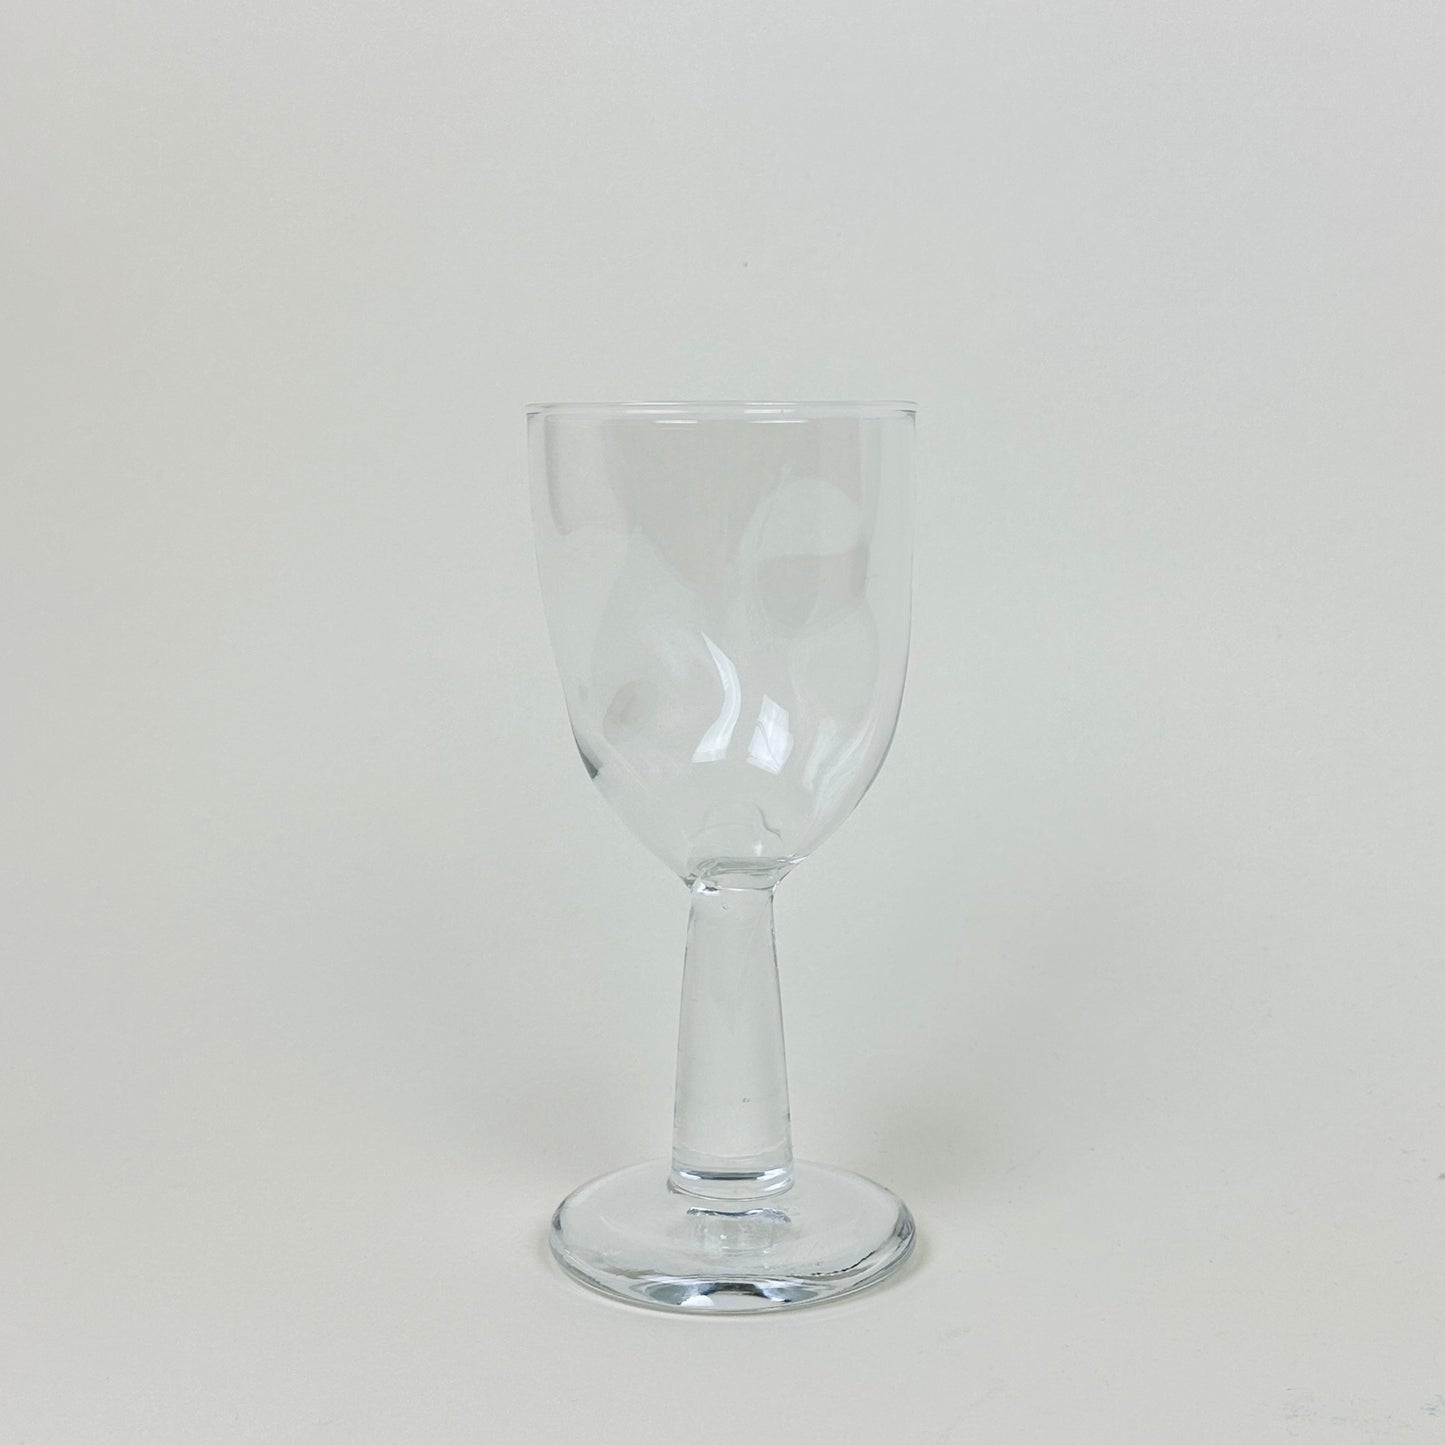 Wine glass by Silje Lindrup